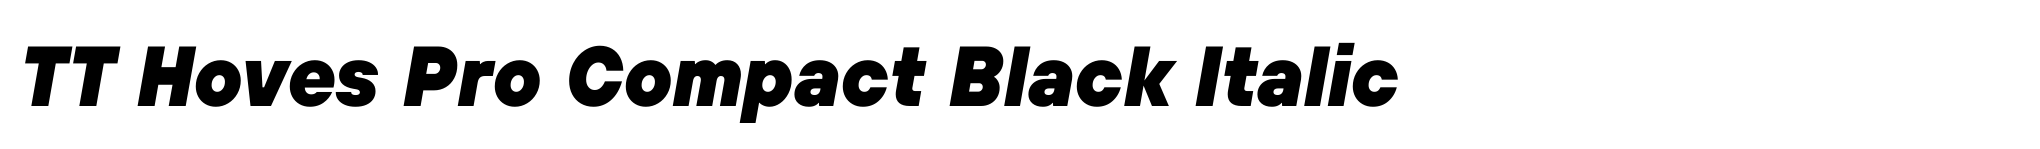 TT Hoves Pro Compact Black Italic image